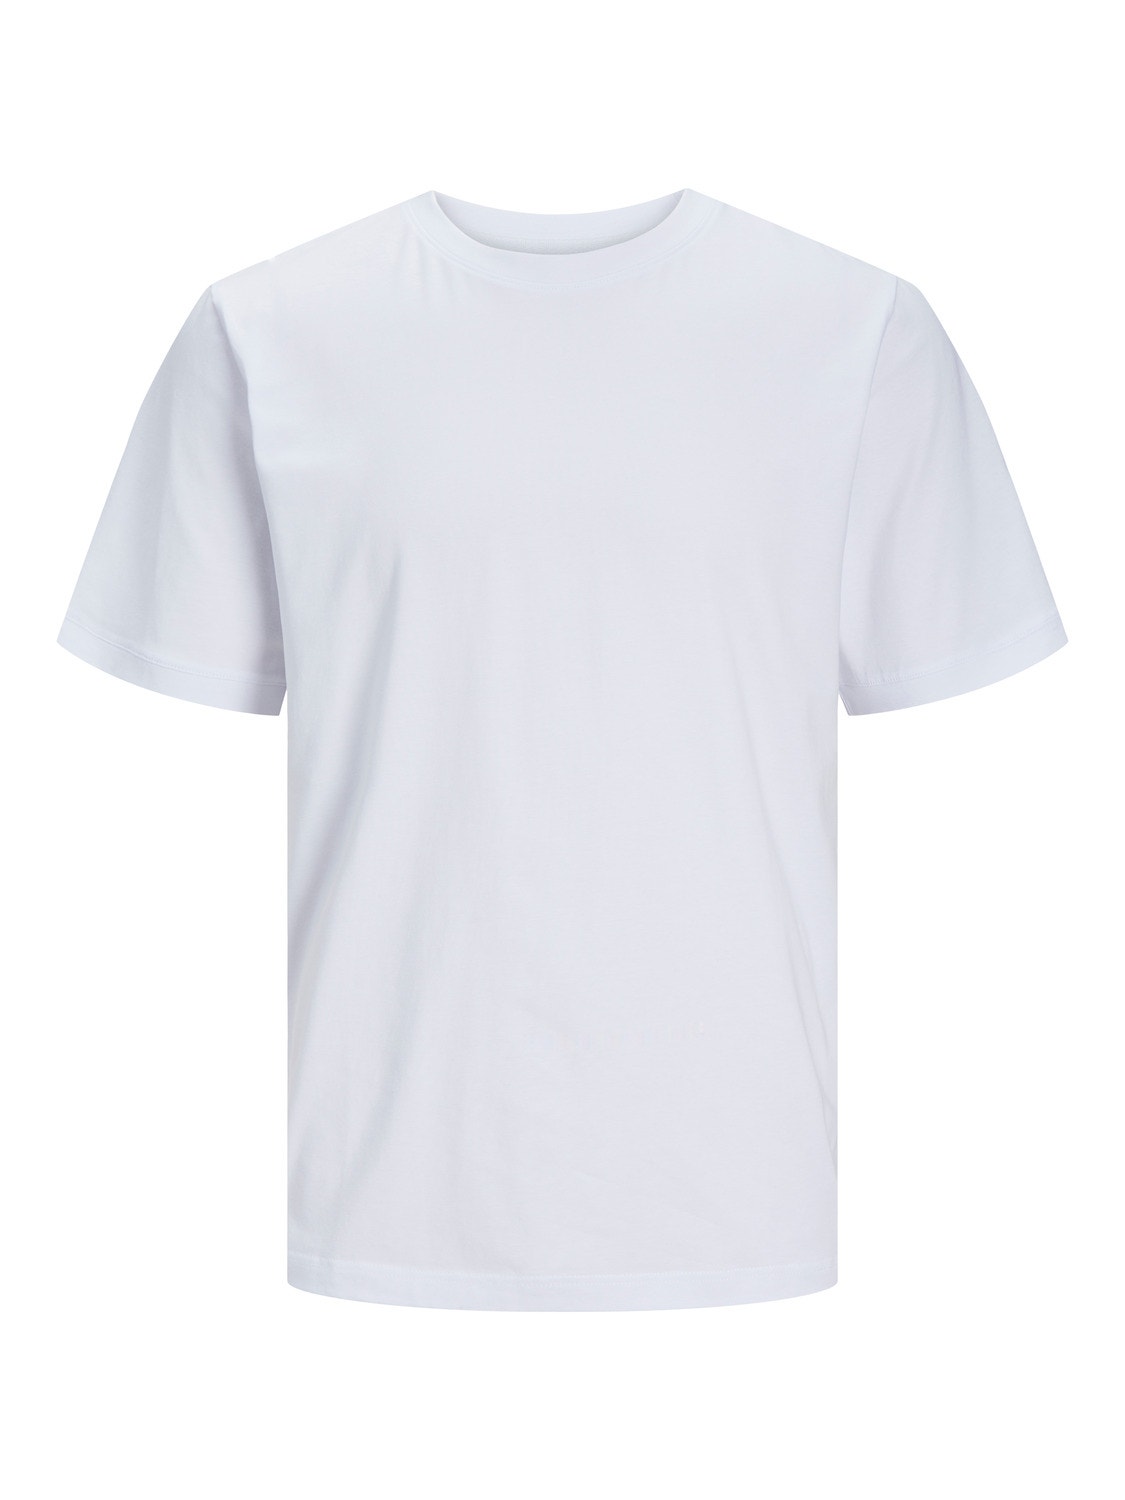 Jack & Jones Plain Crew neck T-shirt -White - 12251351